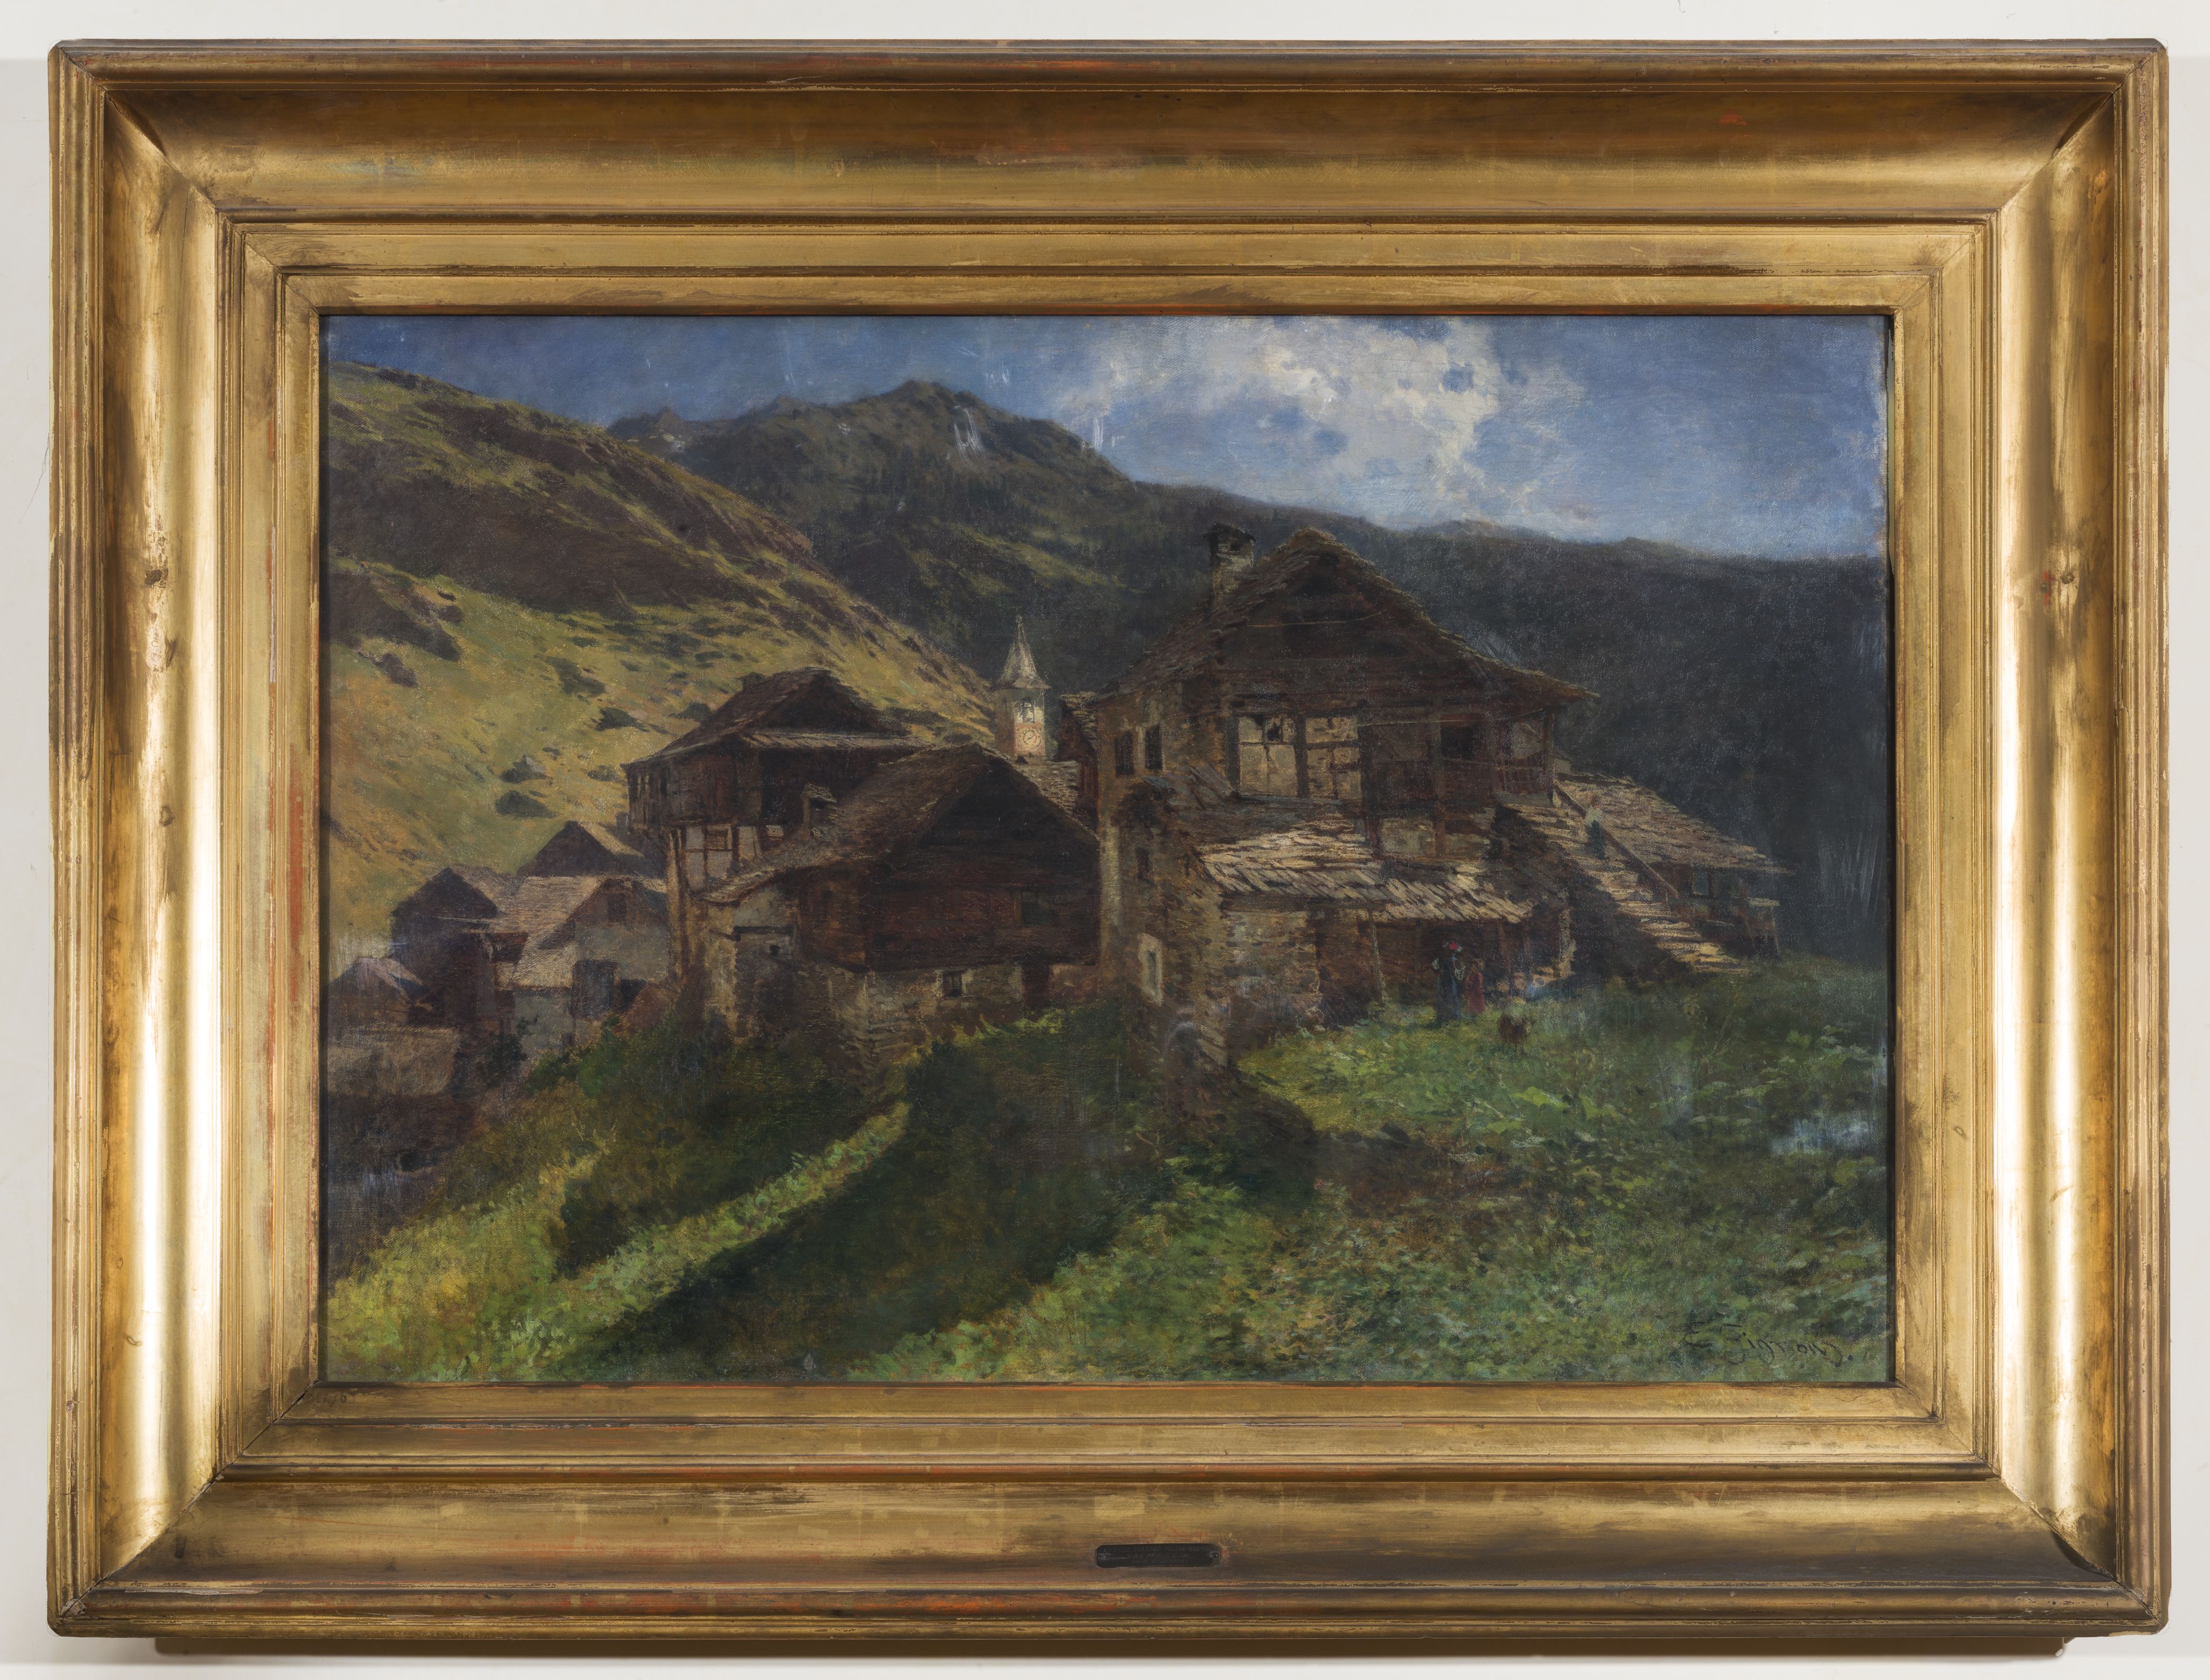 Valmaggia, paesaggio montano con case (dipinto, opera isolata) di Gignous Eugenio (Milano, 1850/ Stresa, 1906) - milanese (sec. XIX)